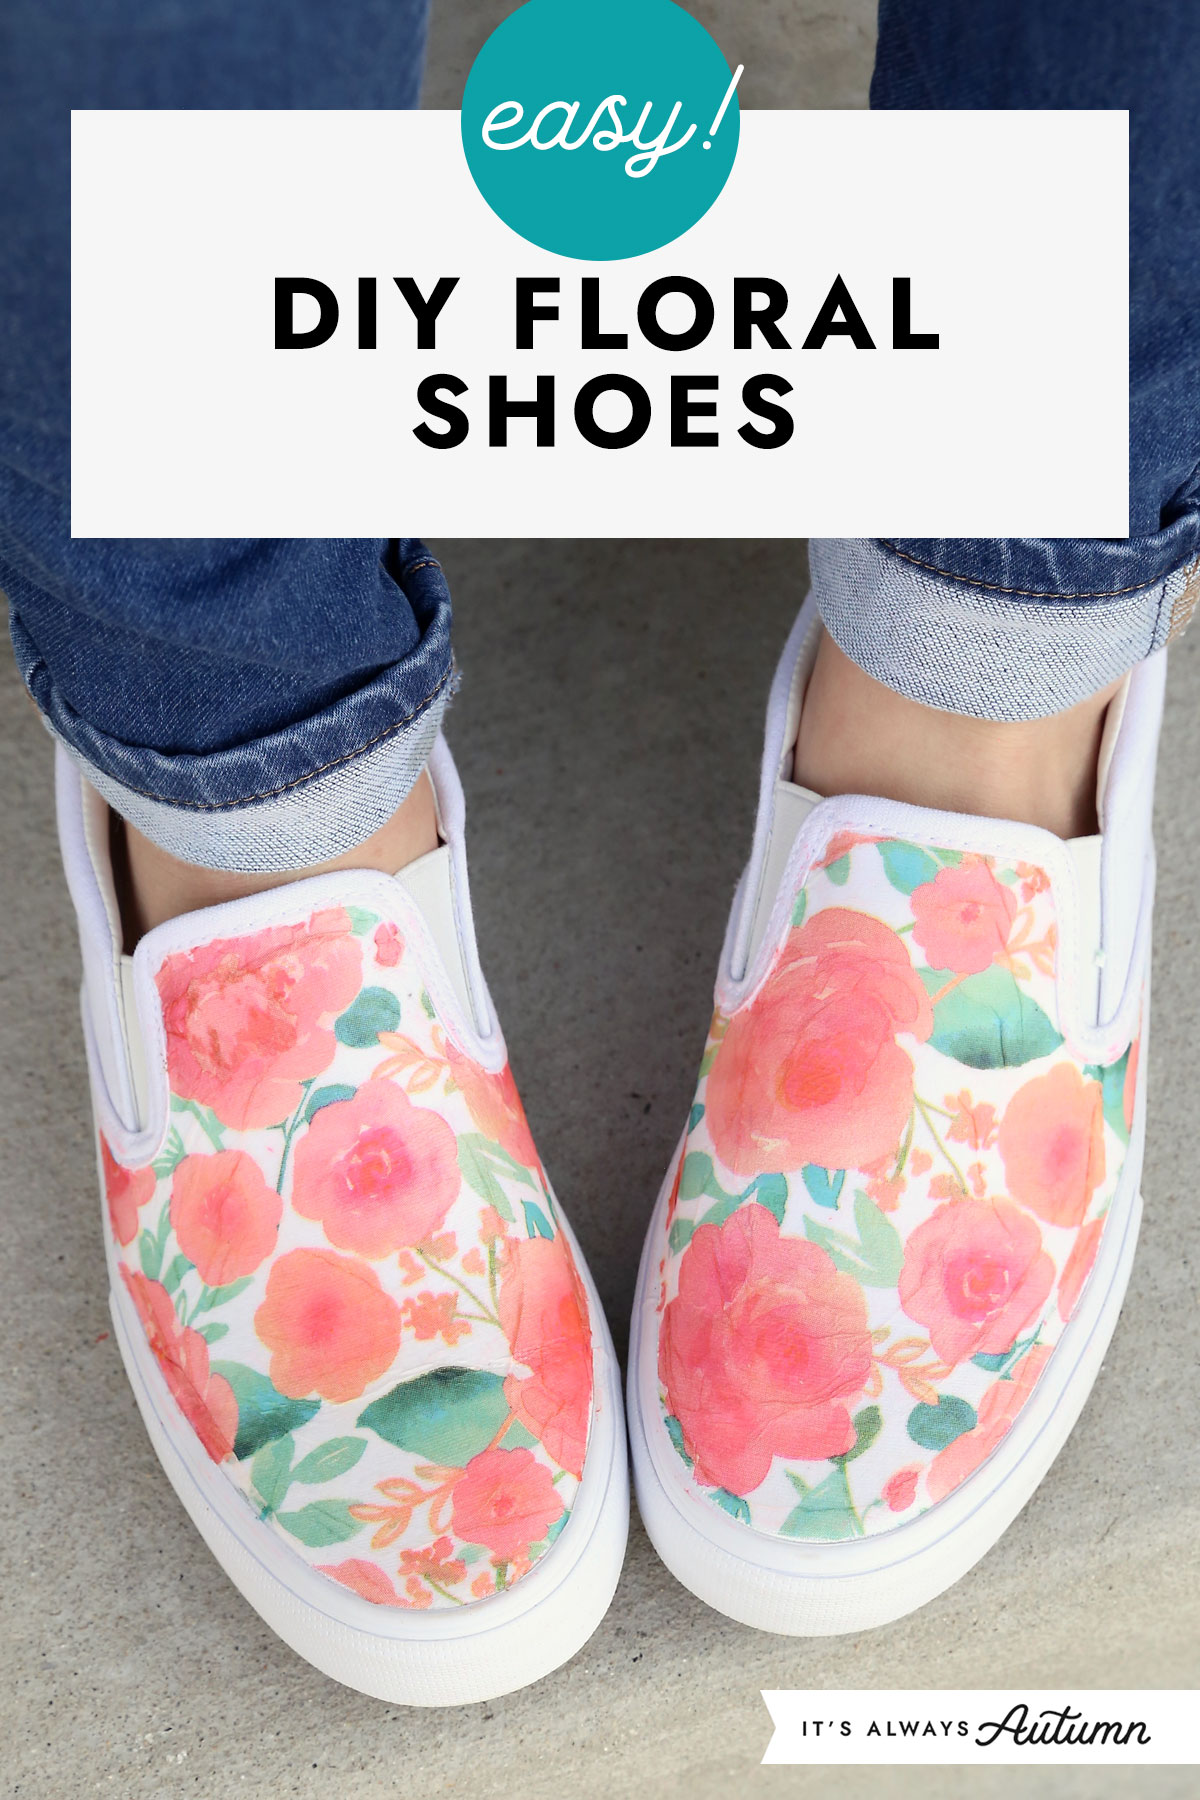 Easy! DIY floral shoes.